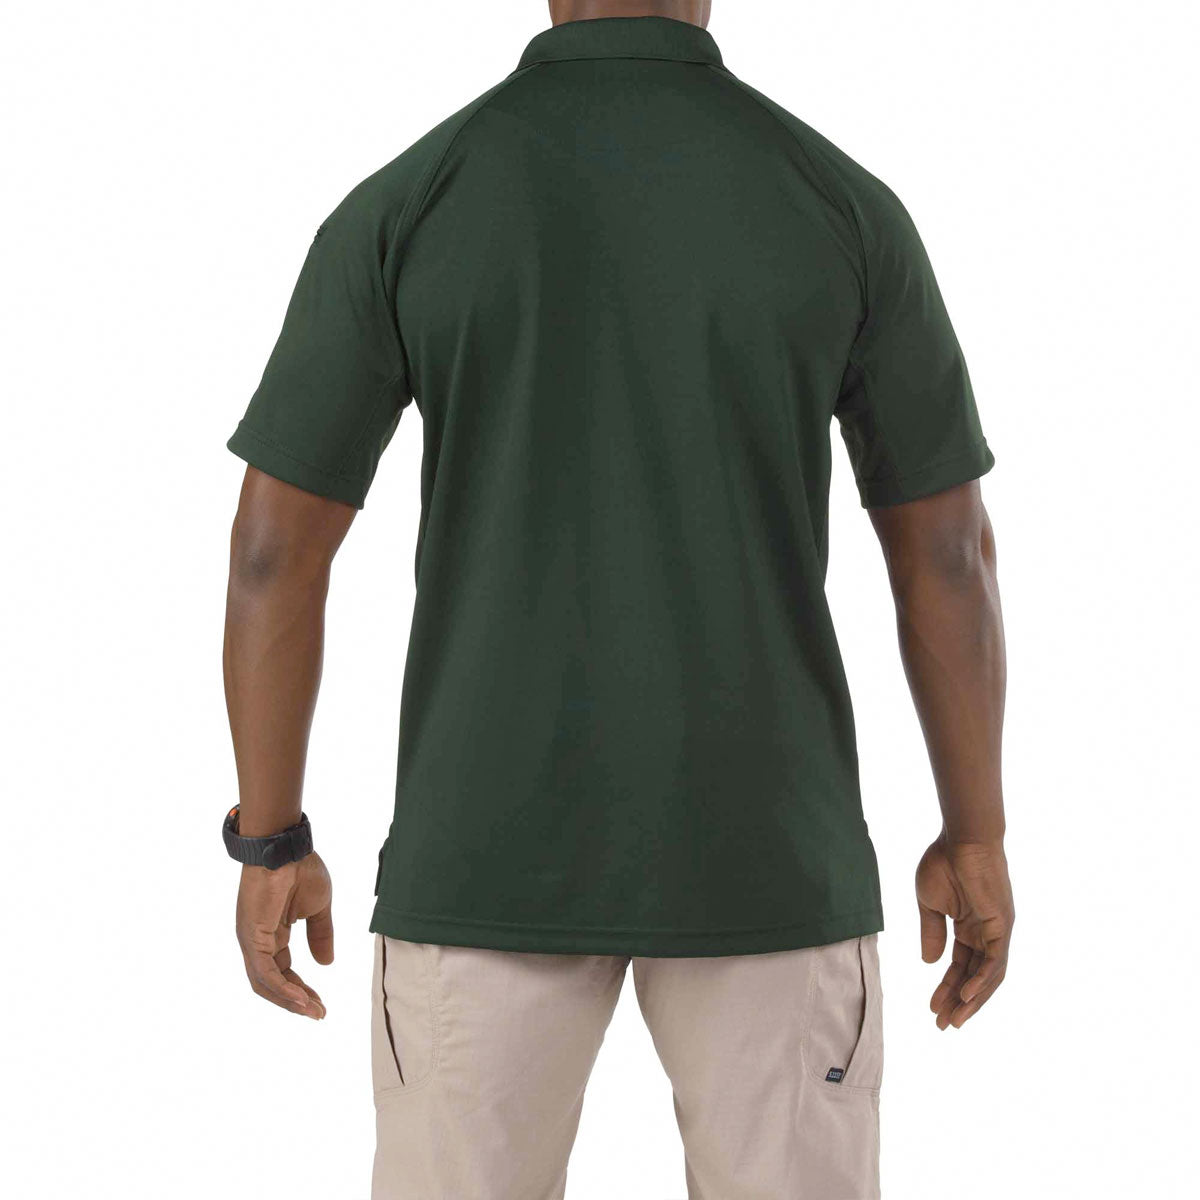 5.11 Tactical Performance Short Sleeve Polo Shirts L.E. Green (Copy) Shirts 5.11 Tactical Tactical Gear Supplier Tactical Distributors Australia